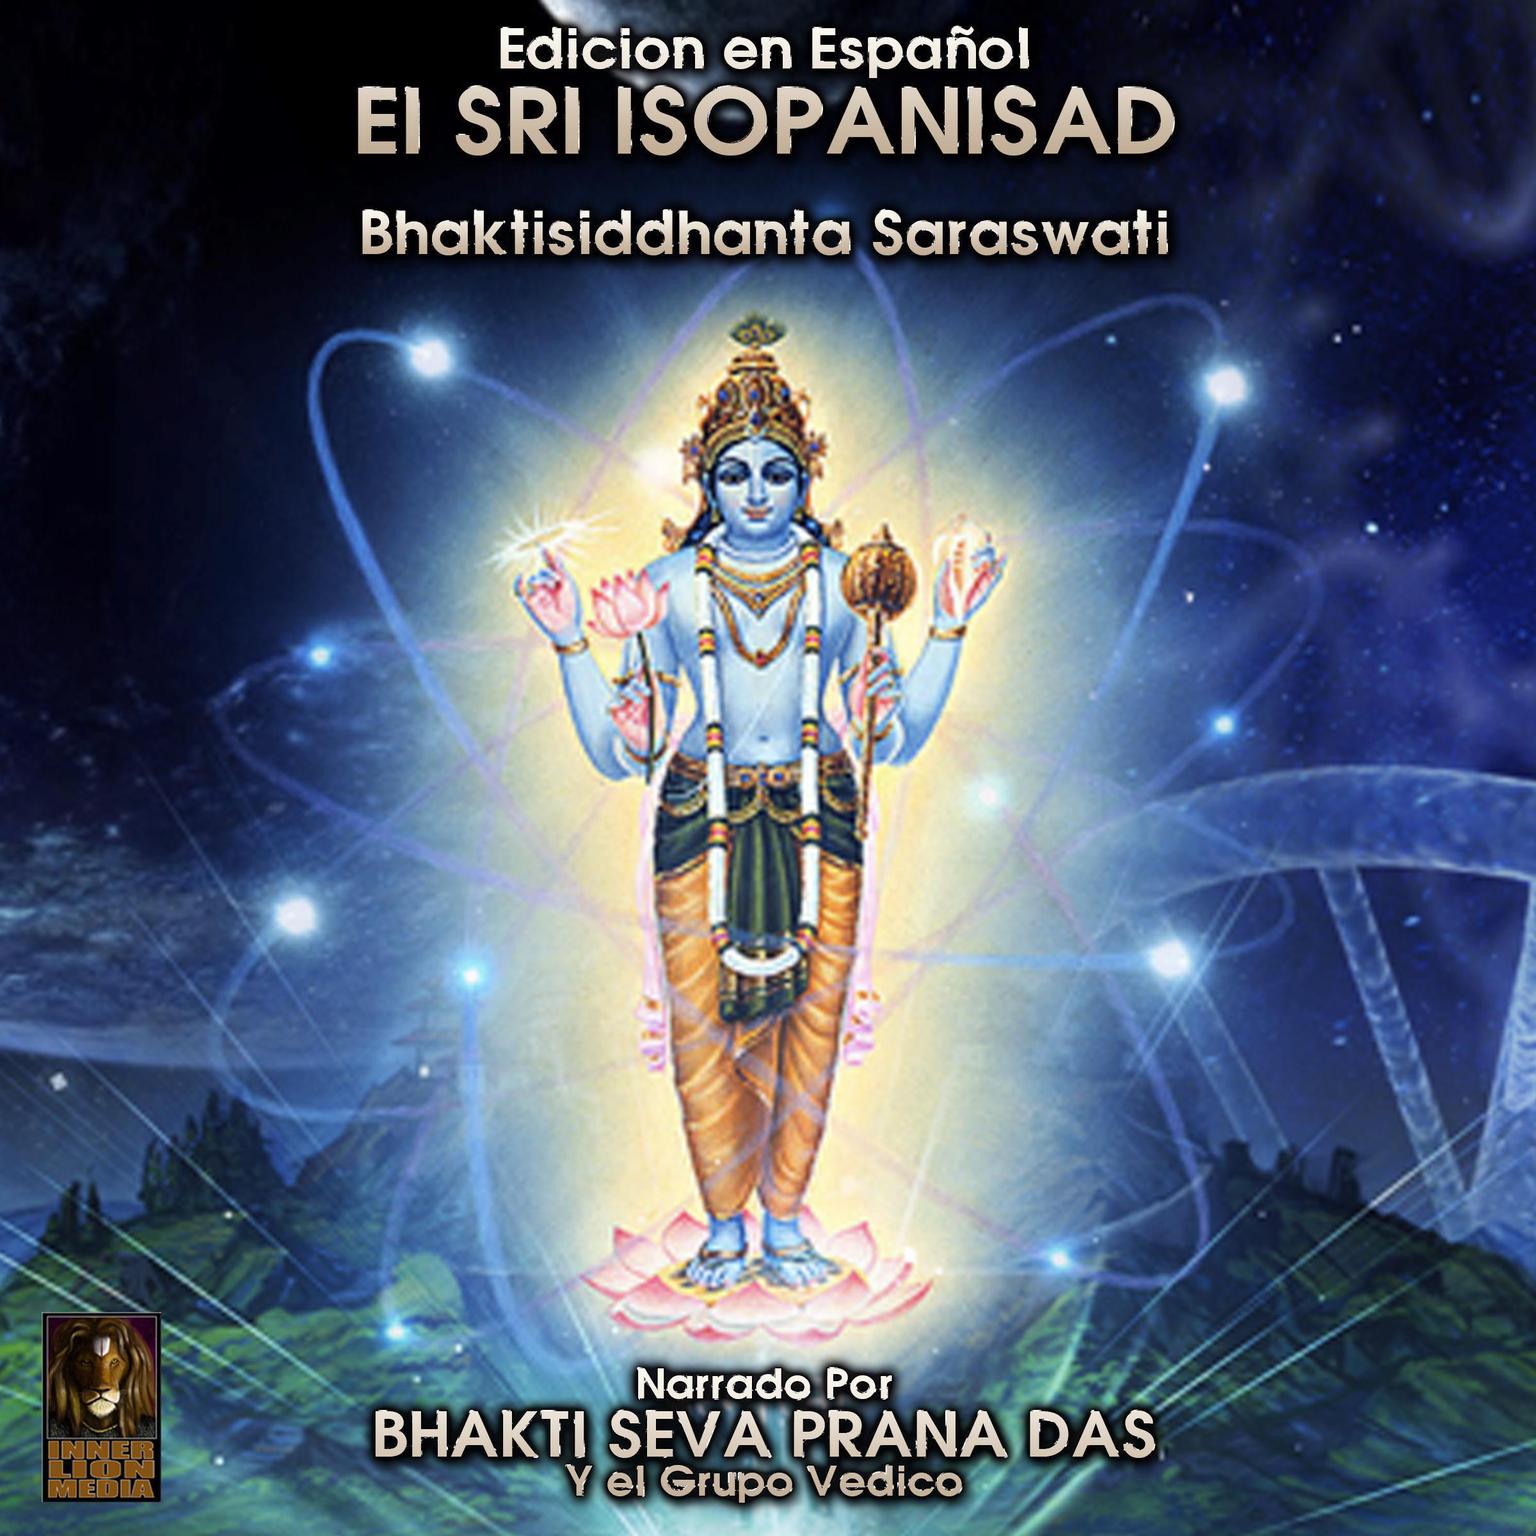 Edicion en Espanol El Sri Isopanisad Audiobook, by Bhaktisiddhanta Saraswati